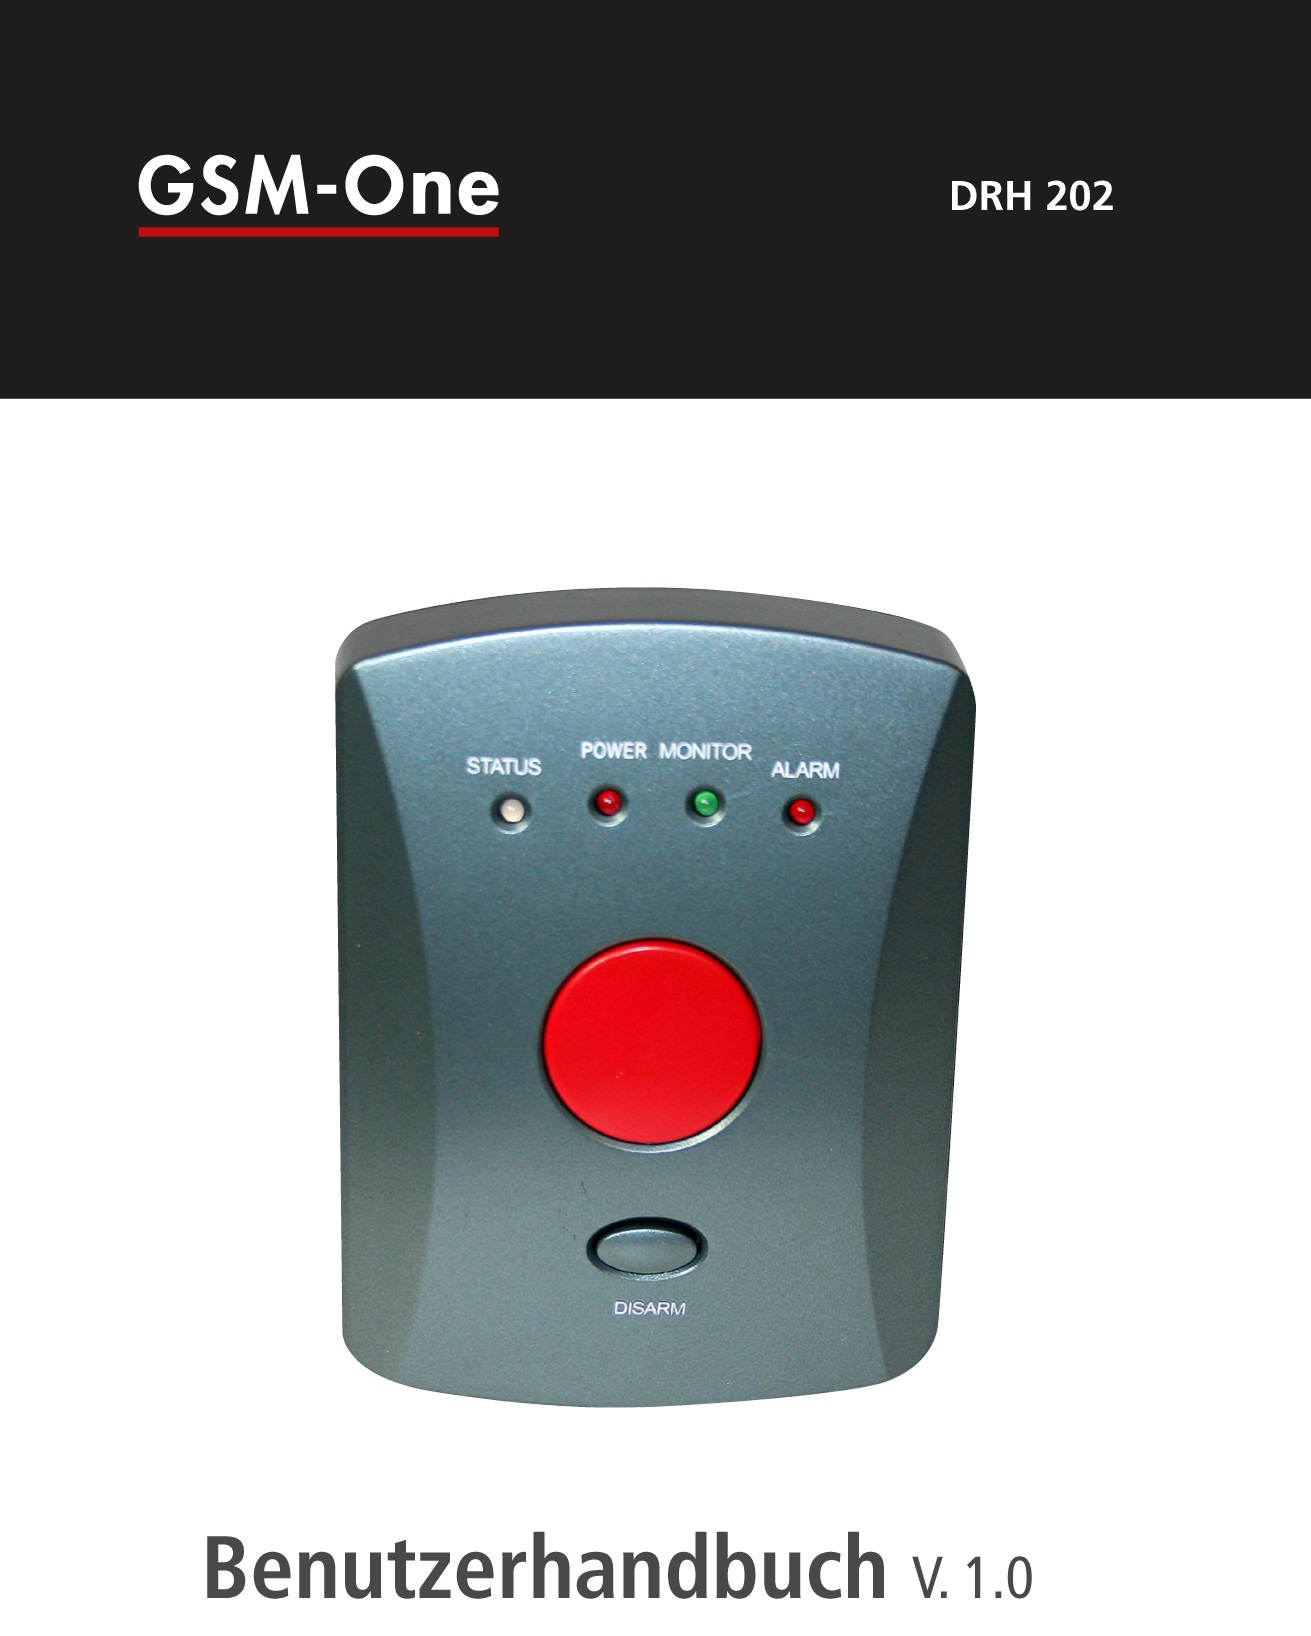 GSM Mini Alarmanlage mit SOS Funktion: DRH-202